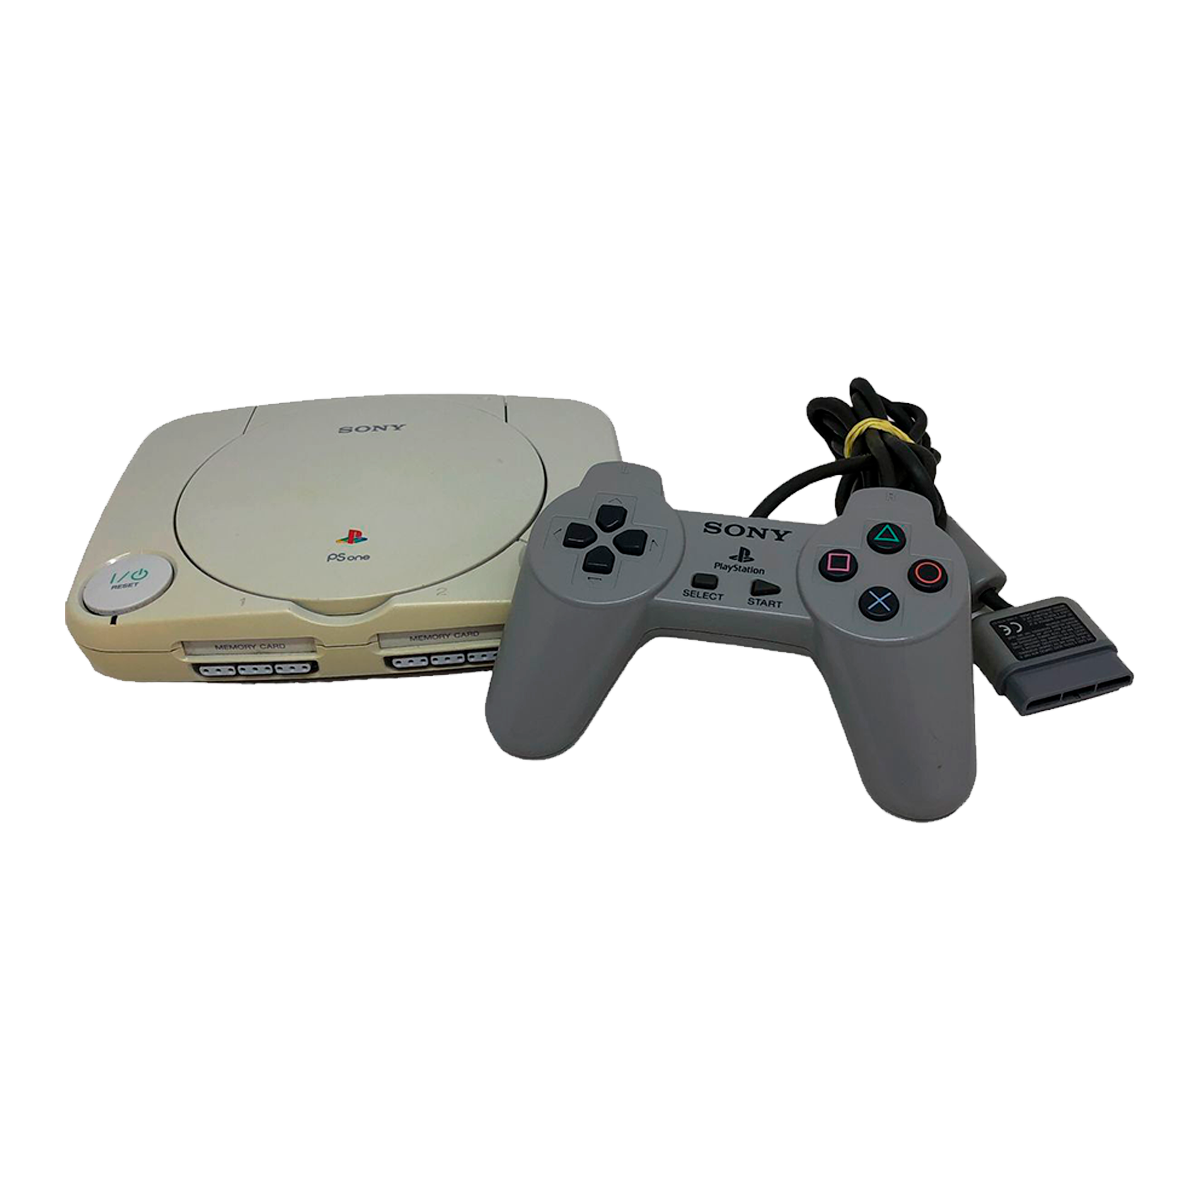 Console PlayStation 2 Slim Preto - Sony - MeuGameUsado